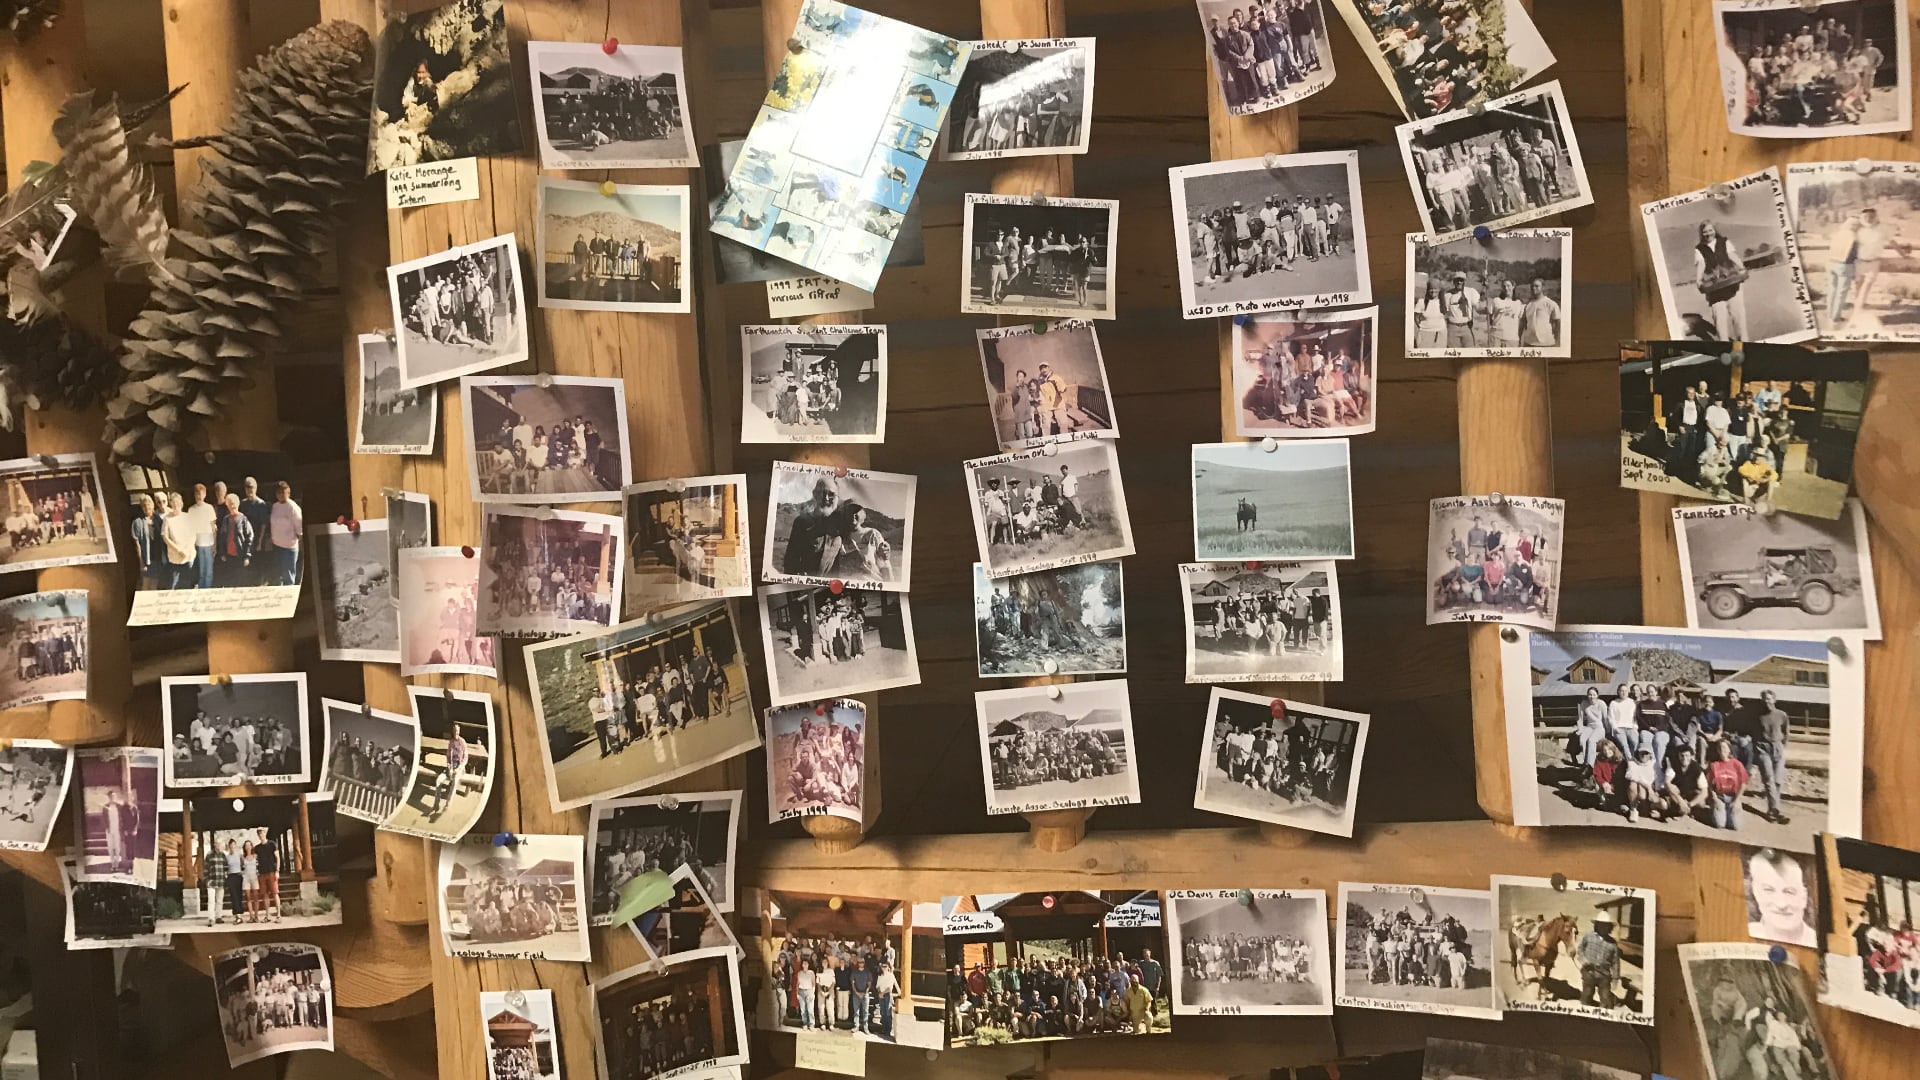 Polaroid photos of past researchers